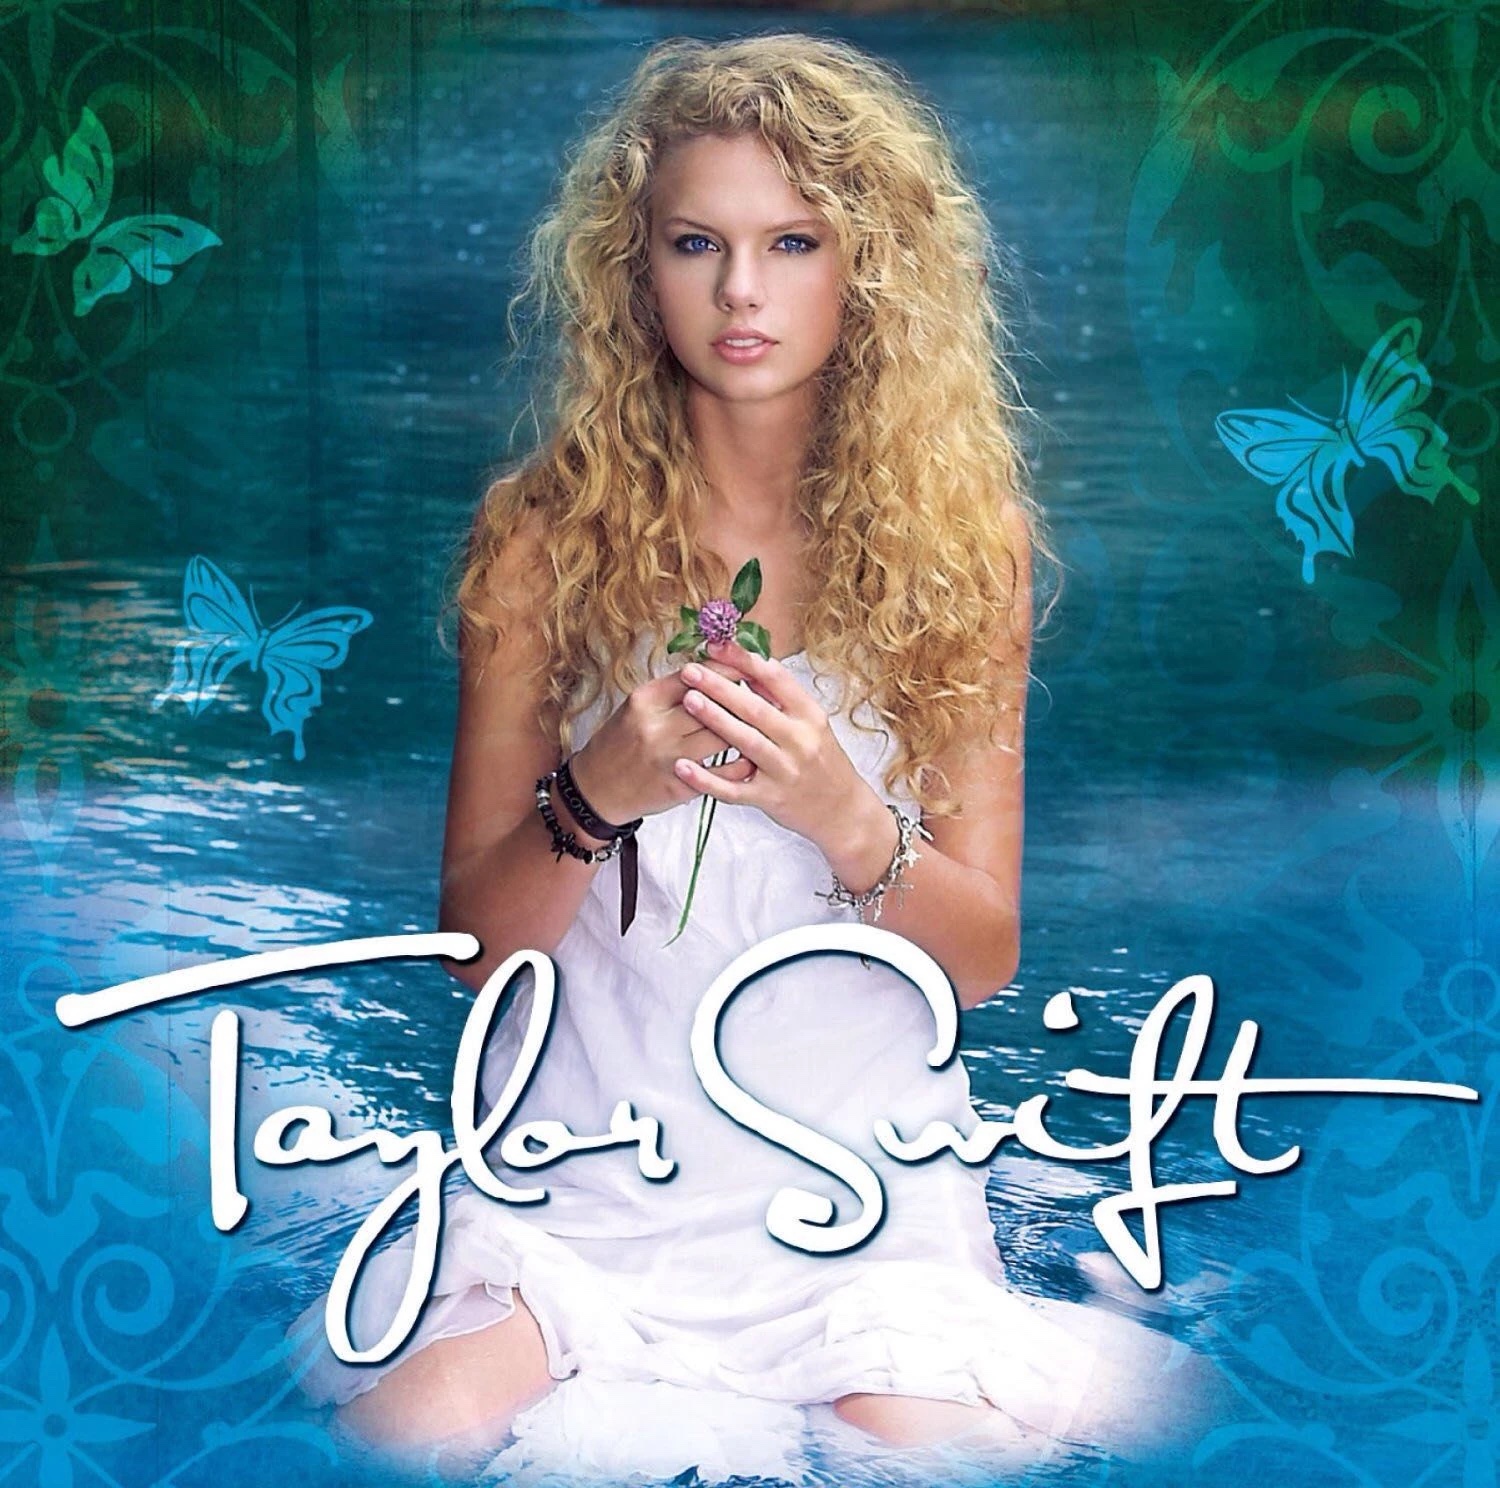 Taylor Swift's 2006 album Taylor Swift